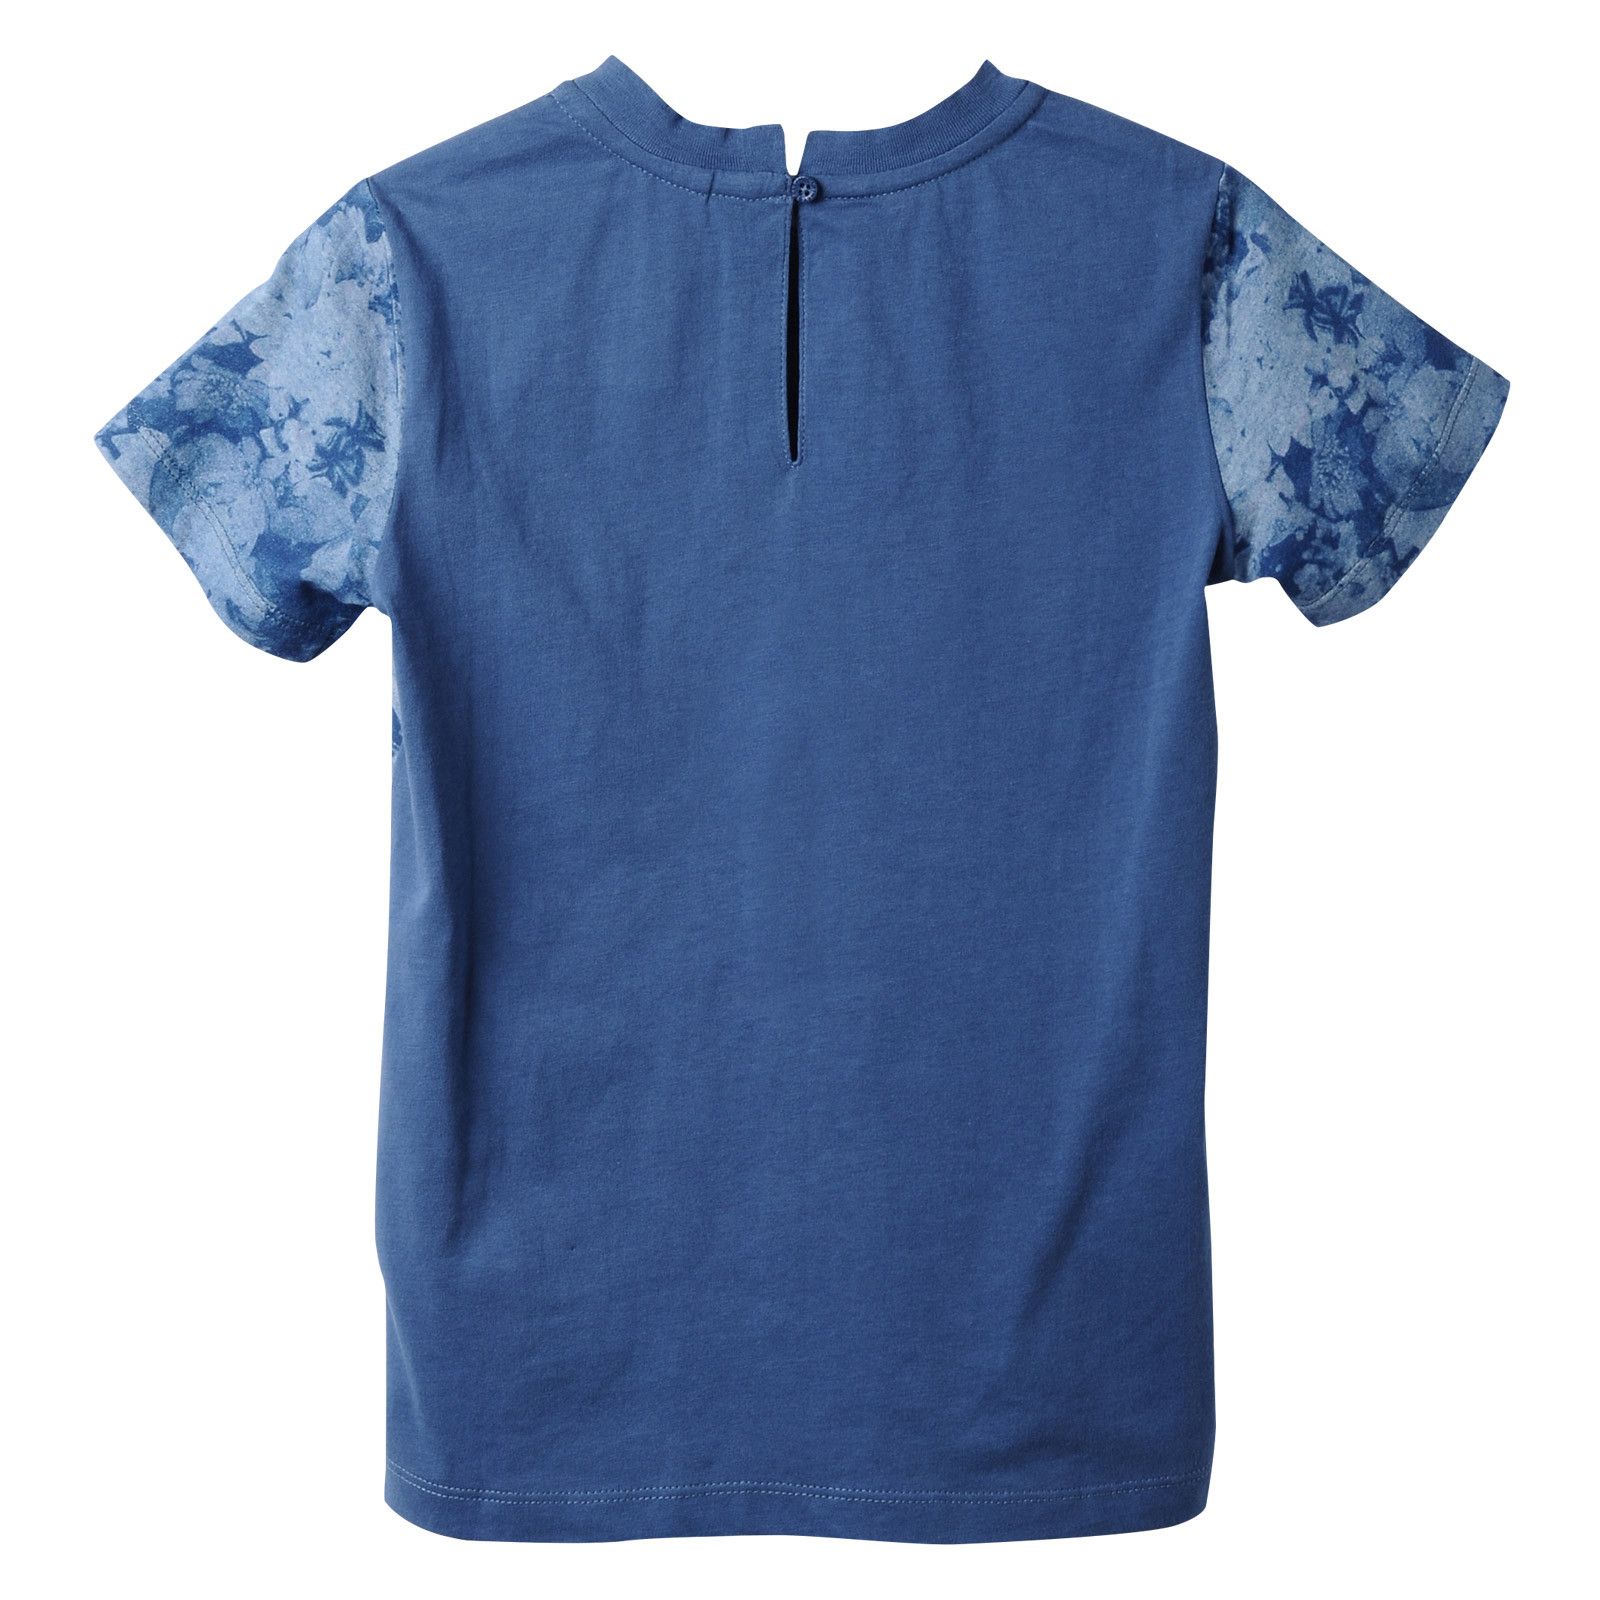 Girls Blue Flower Printed Cotton T-Shirt - CÉMAROSE | Children's Fashion Store - 2